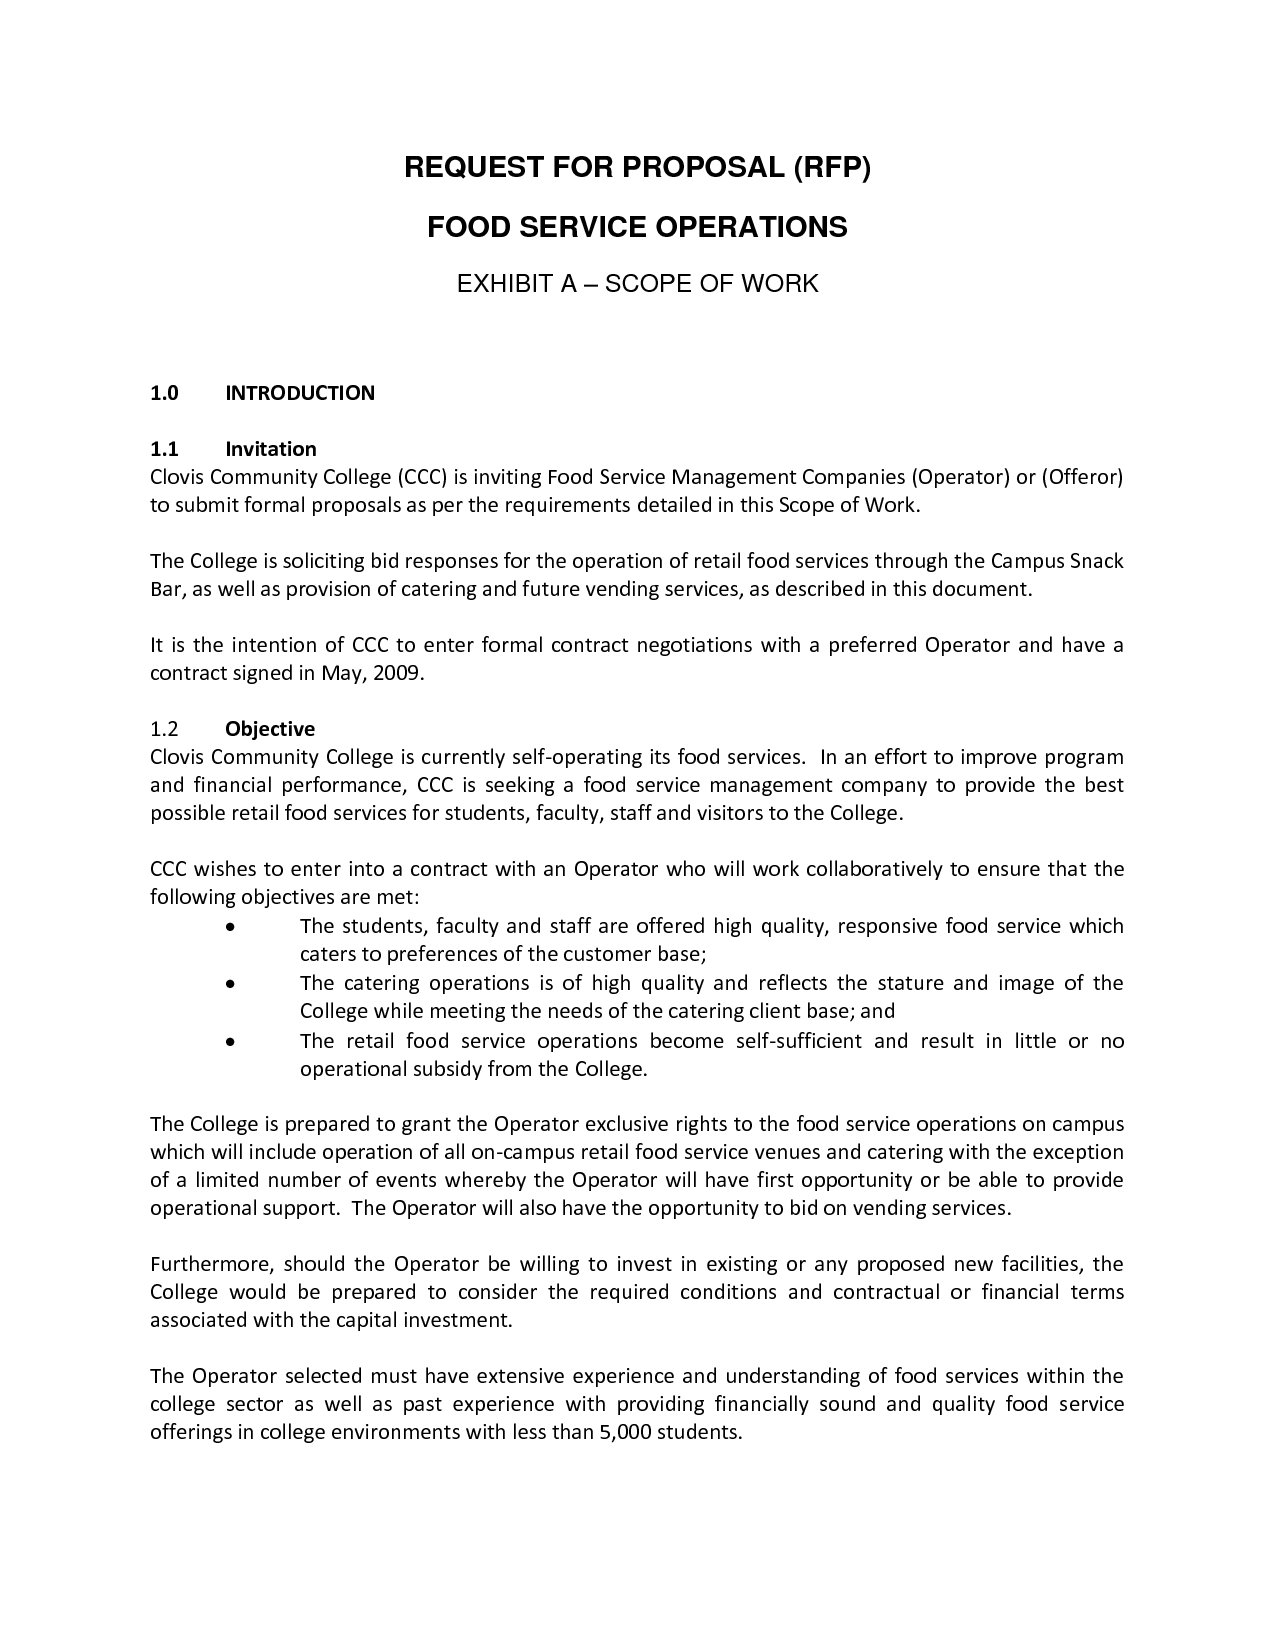 Food Service Proposal Sample Image